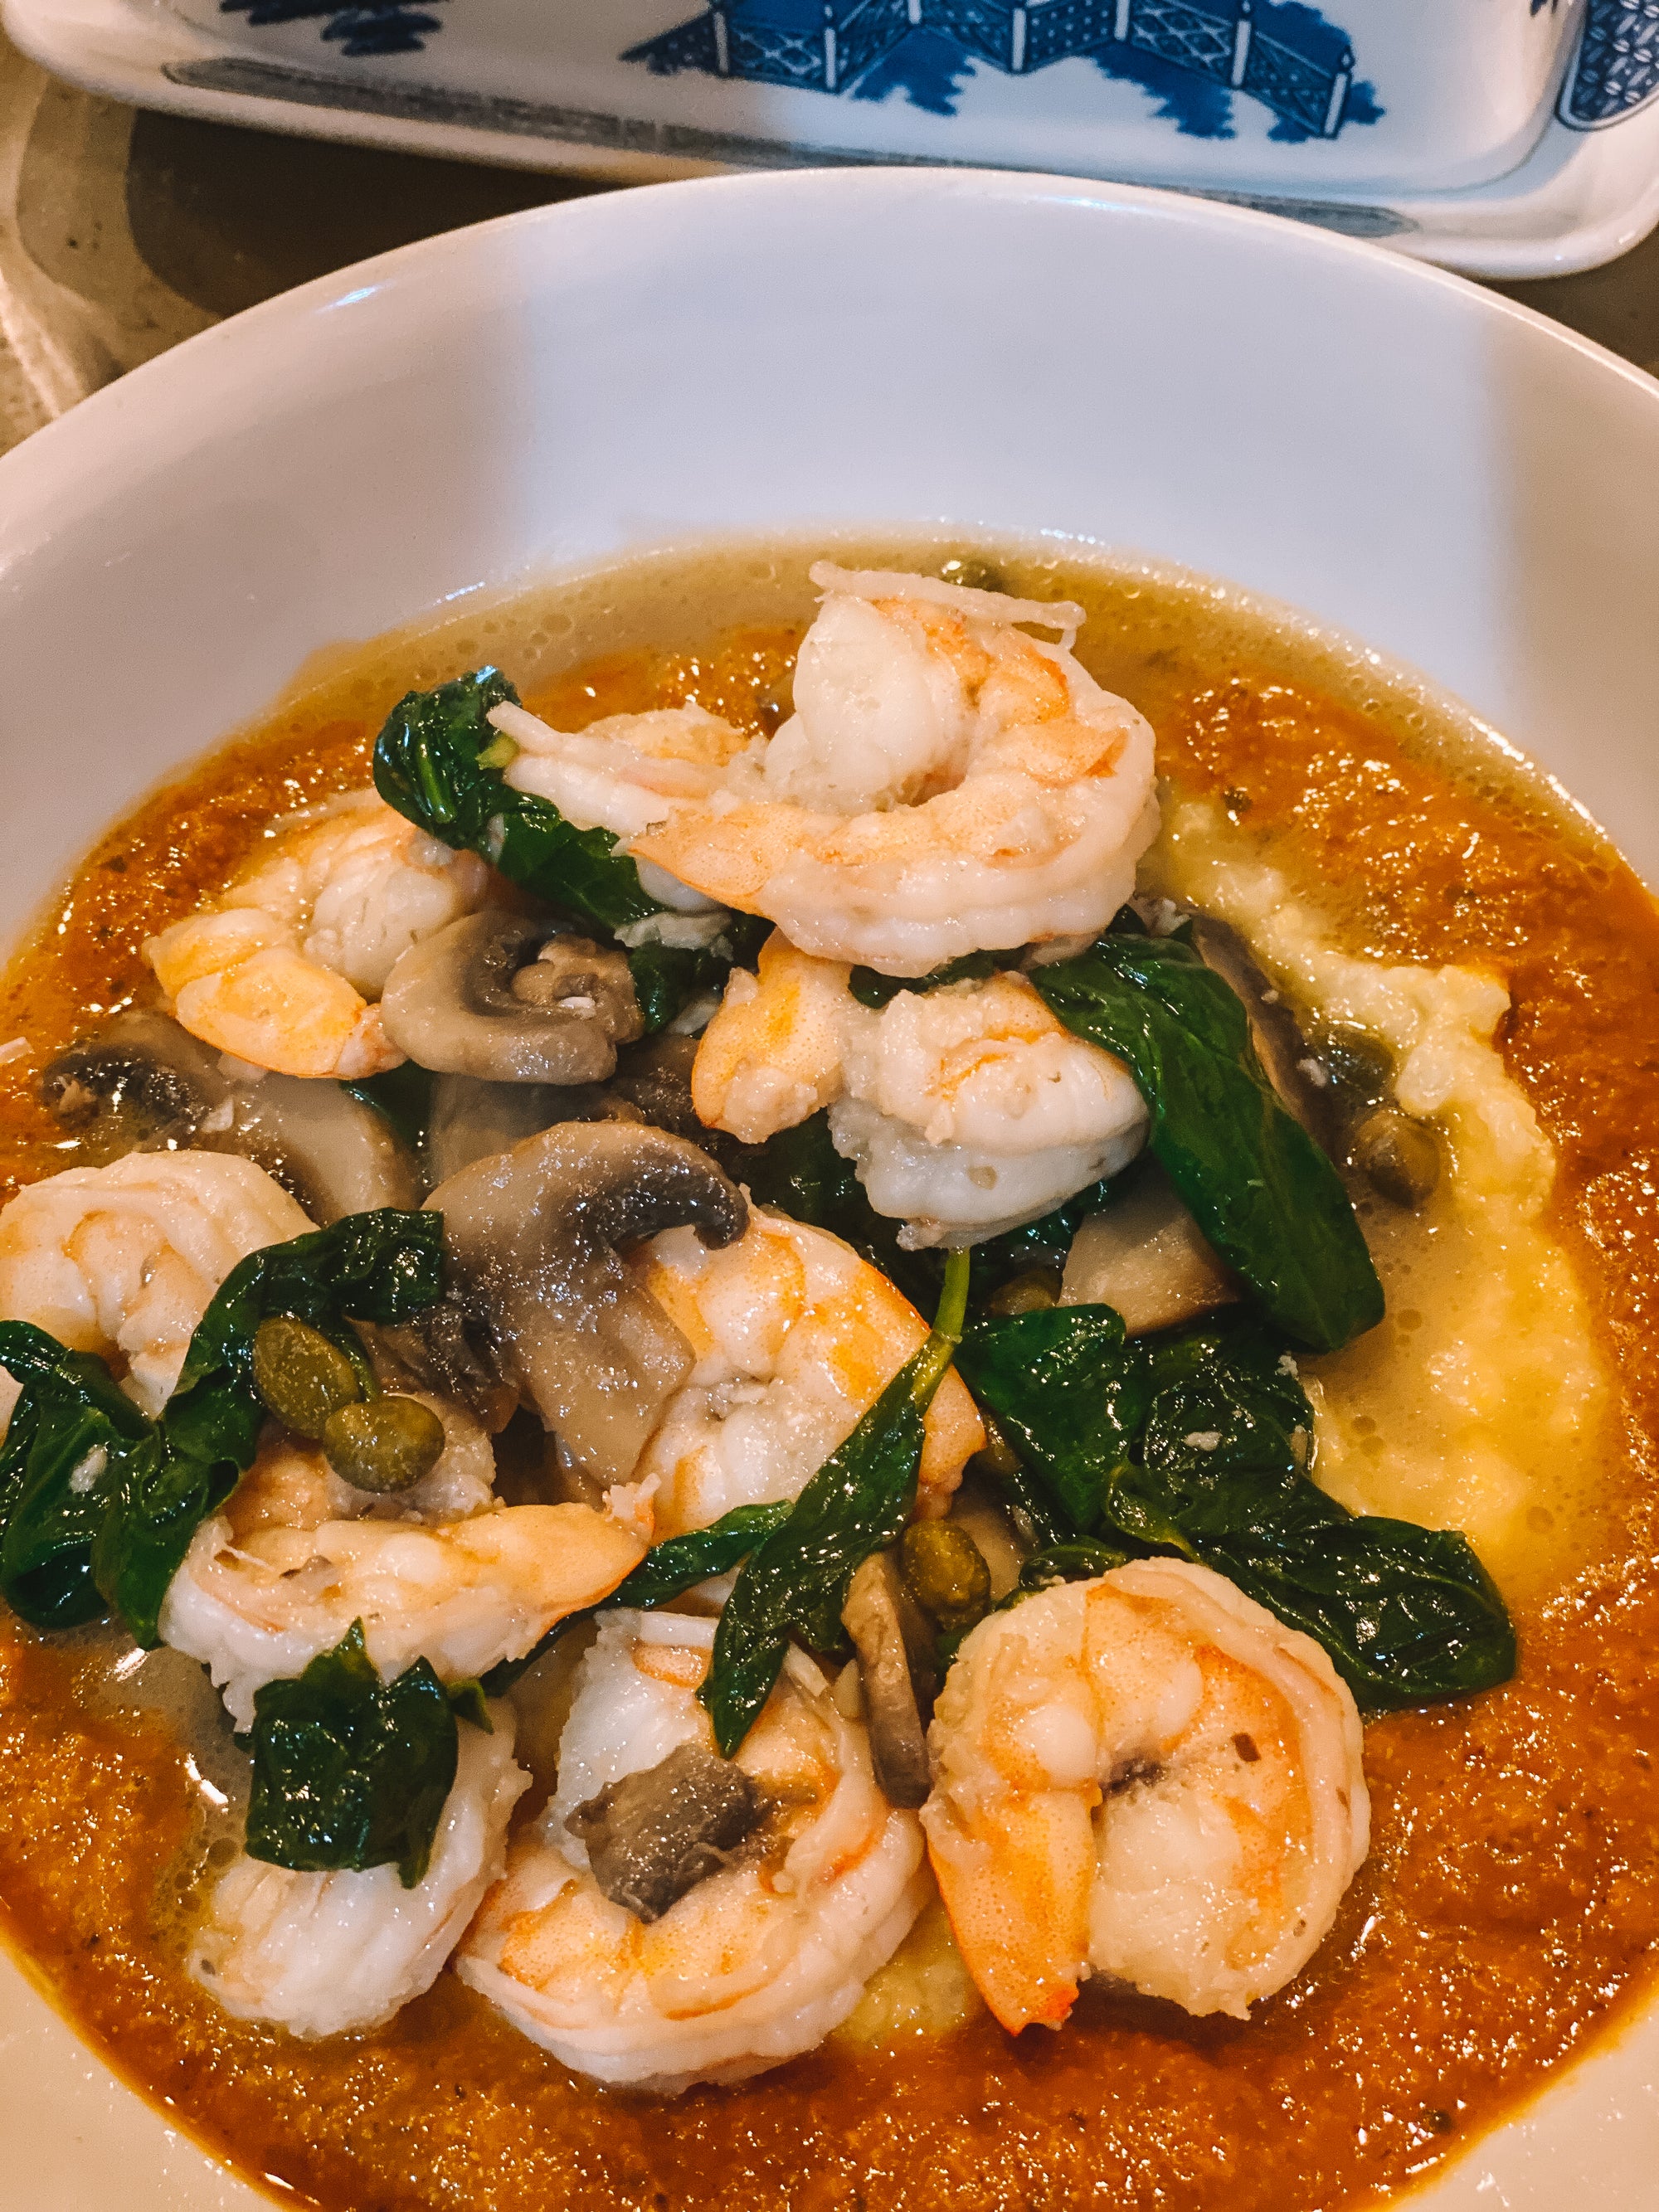 RECIPE: Shrimp Sauté with Mushrooms, Spinach, & Veggie Soireé on Polenta